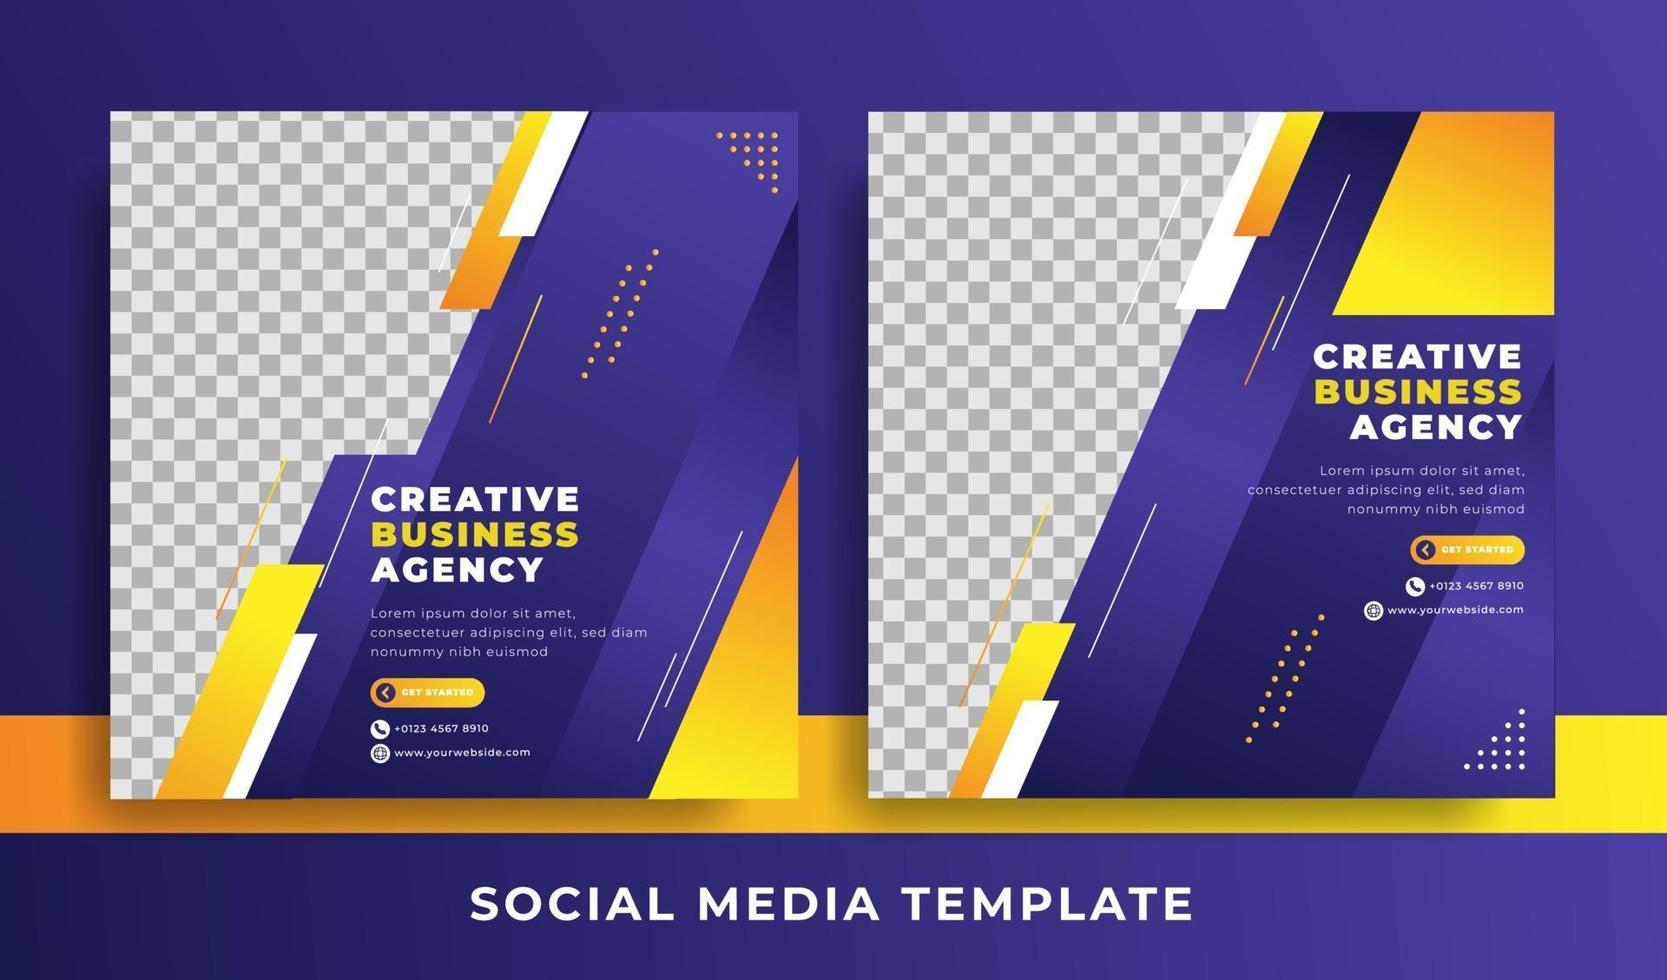 flyer or social media template business theme vector